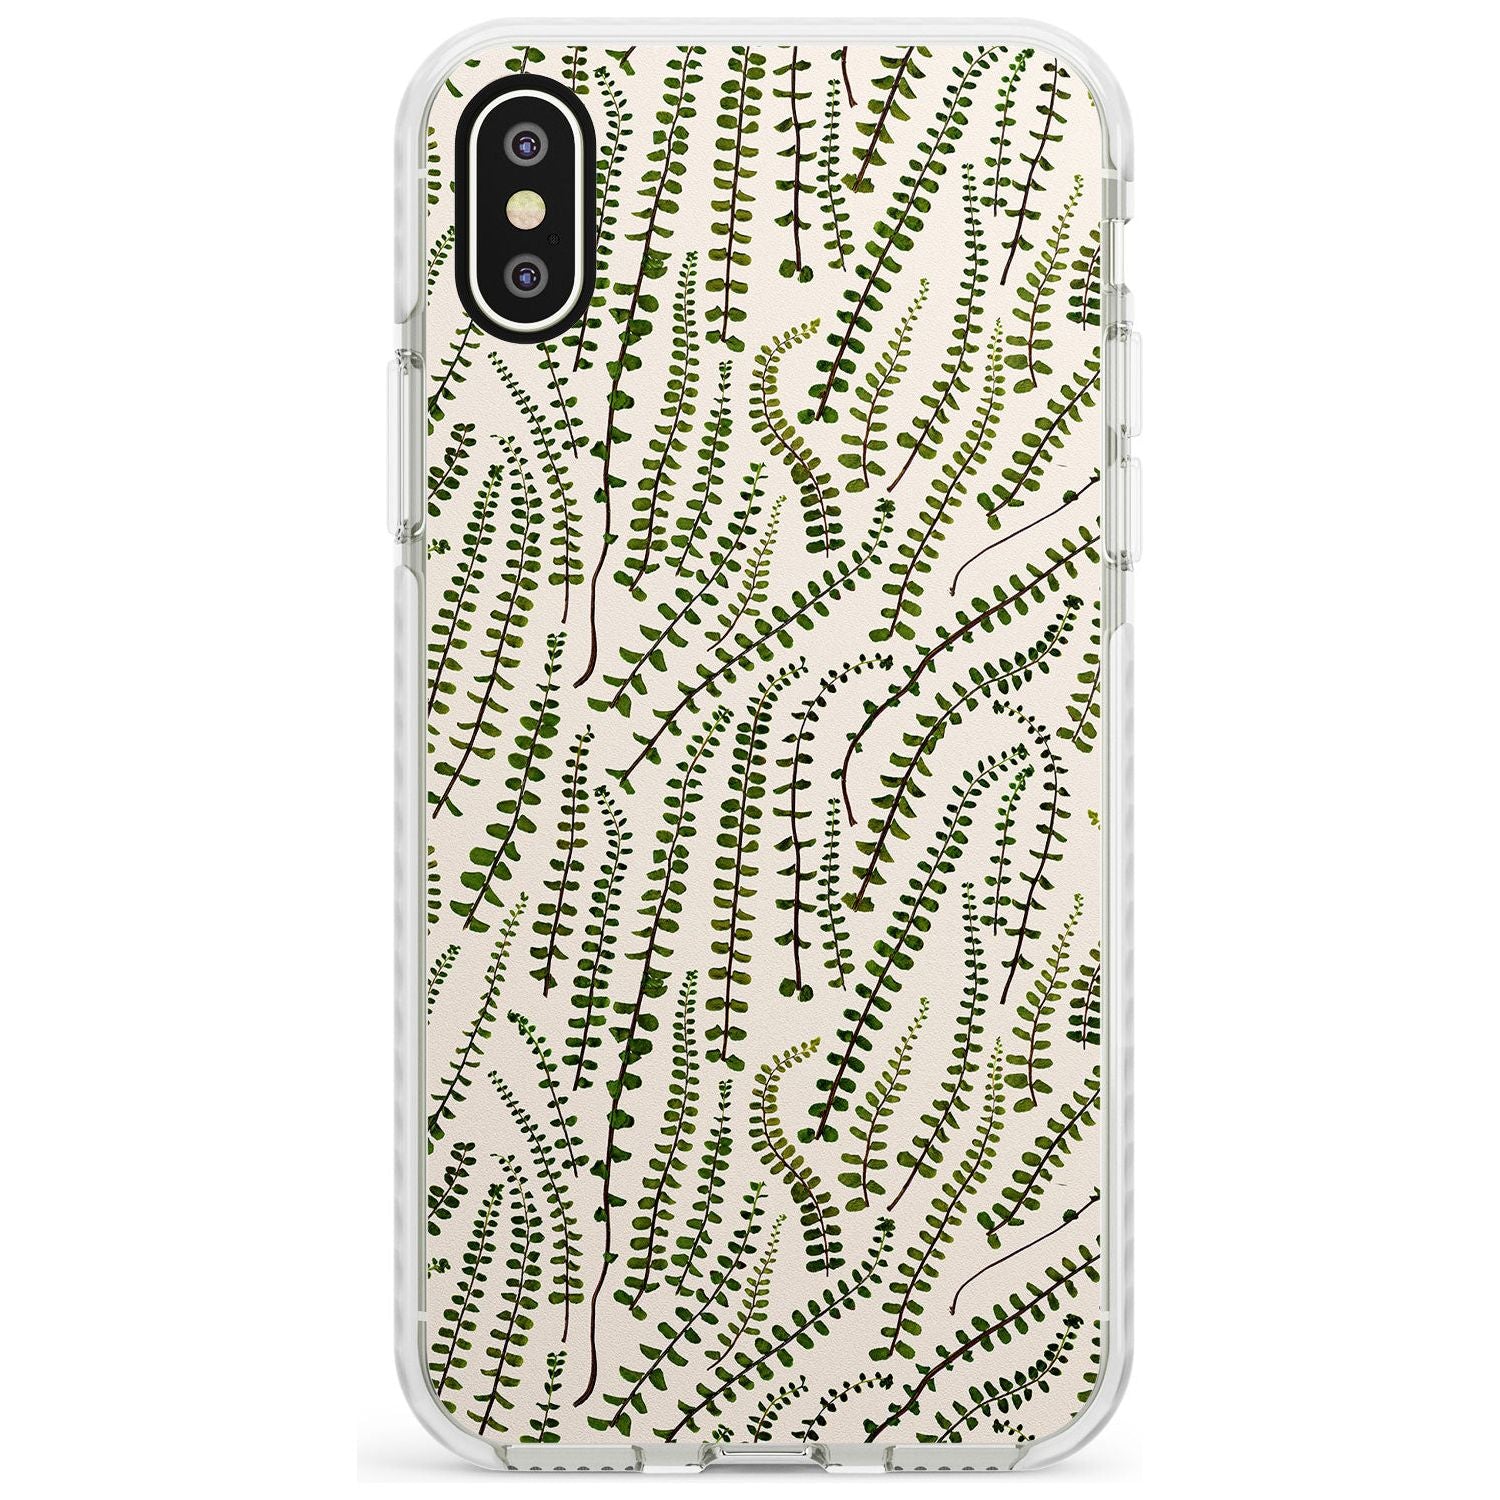 Fern Leaf Pattern Design - Cream Impact Phone Case for iPhone X XS Max XR